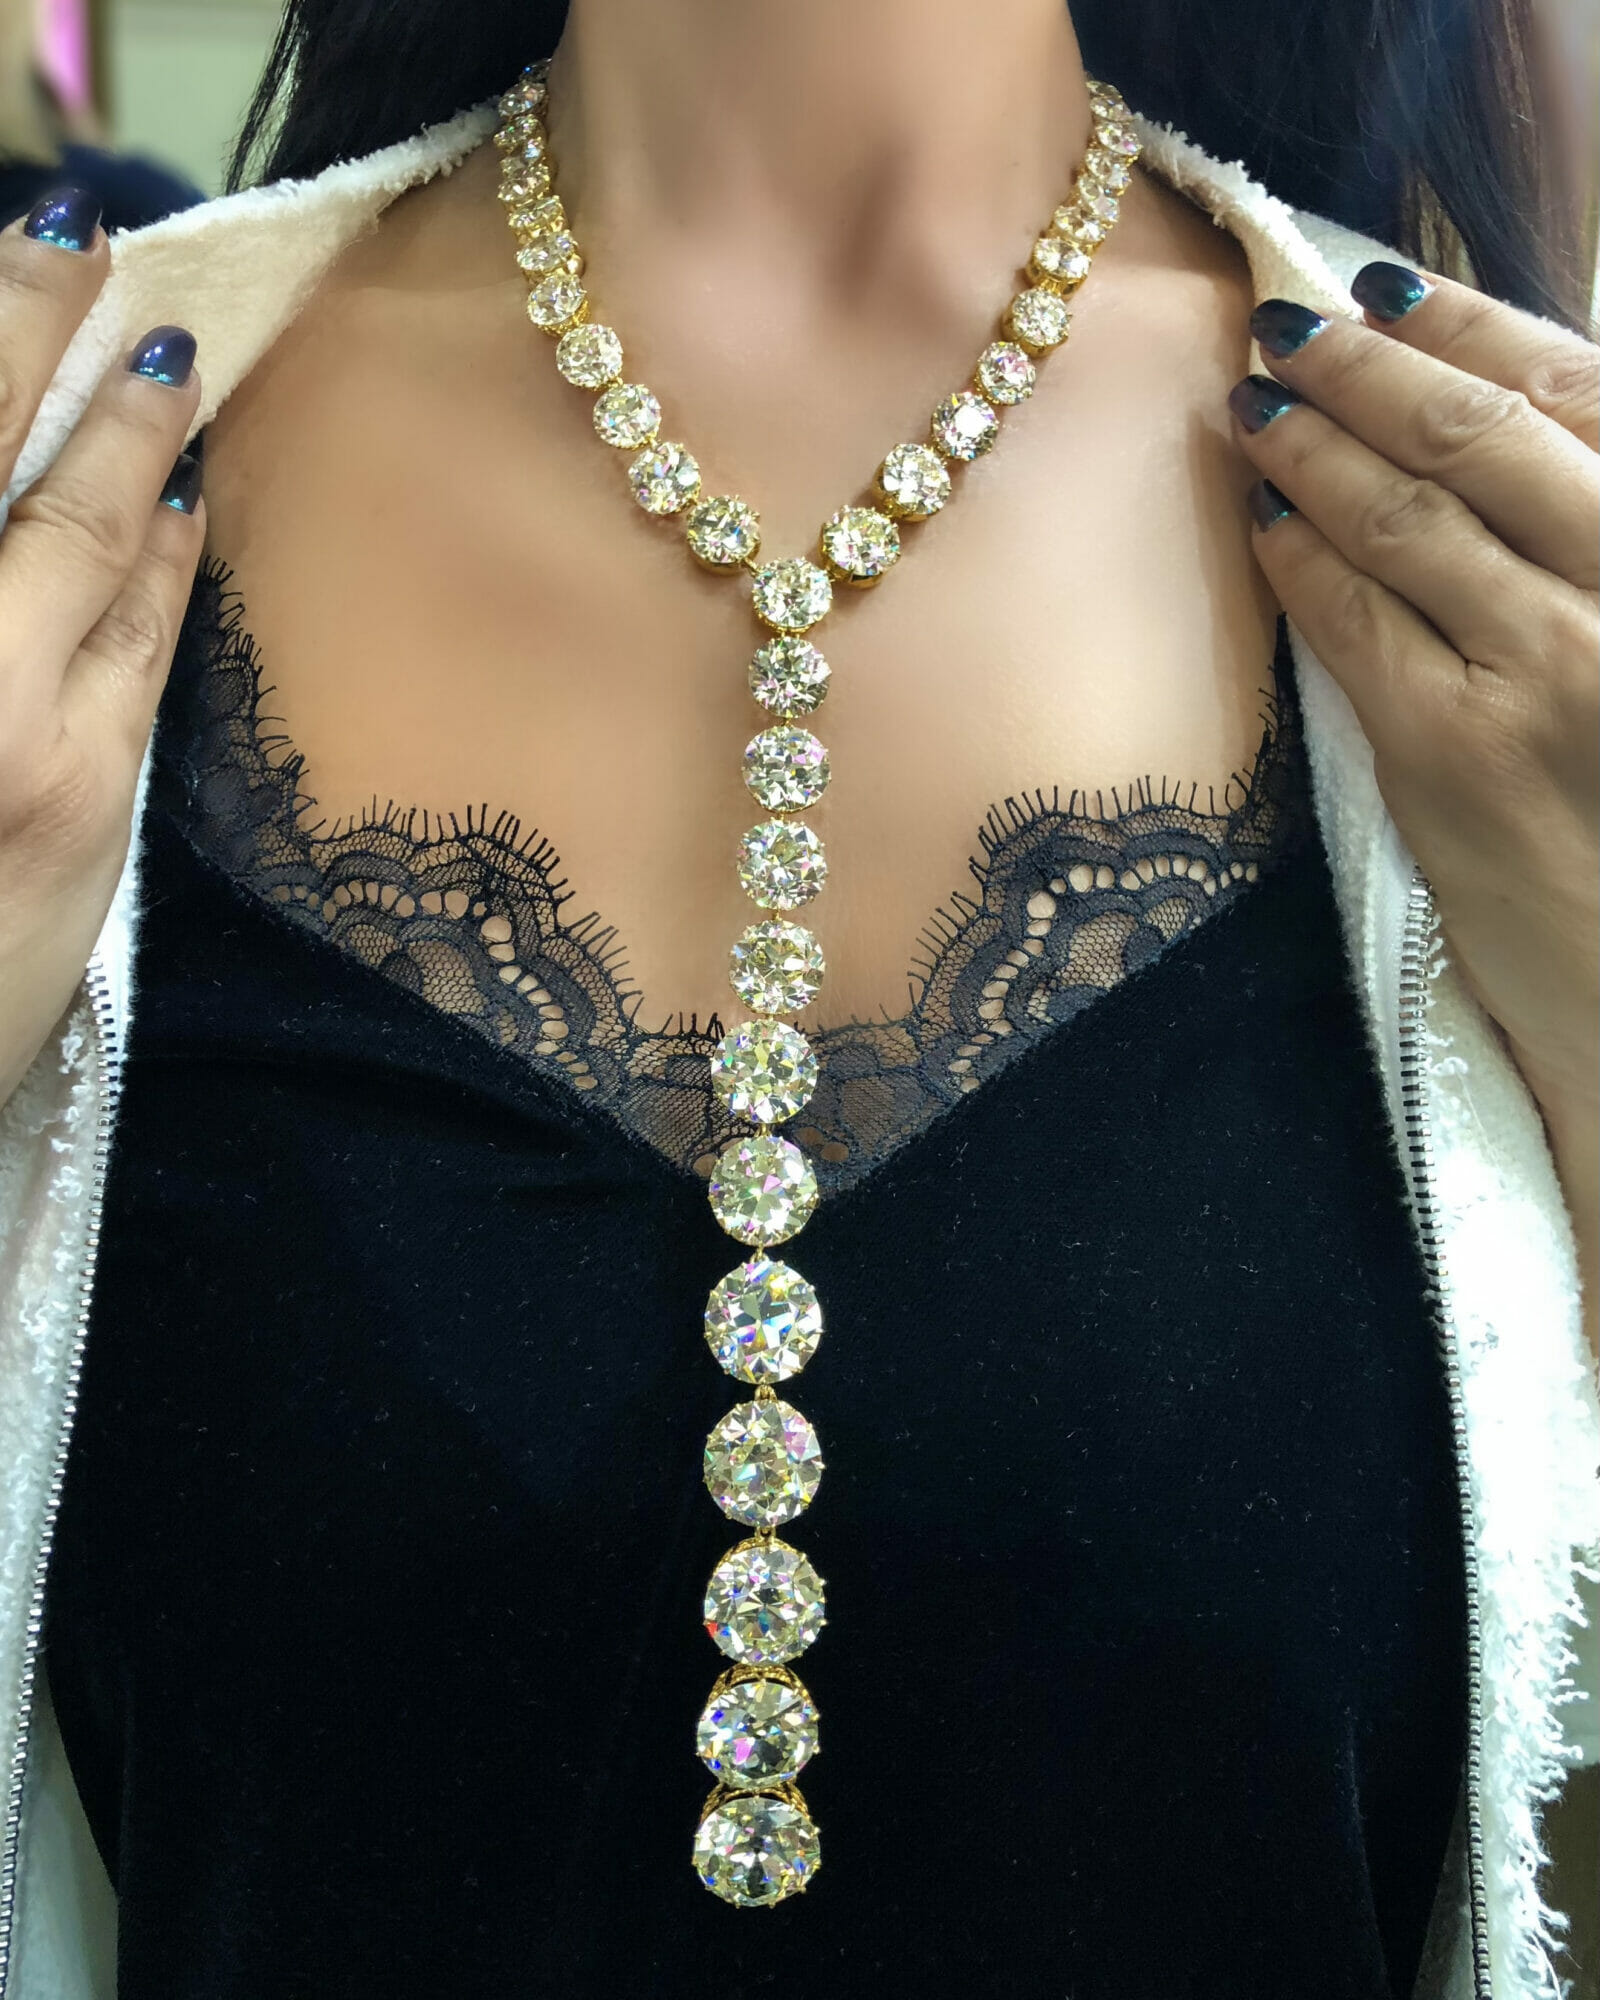 The Diamonds Girl wearing wearing Lorraine Schwartz diamond necklace once worn by Beyoncé.